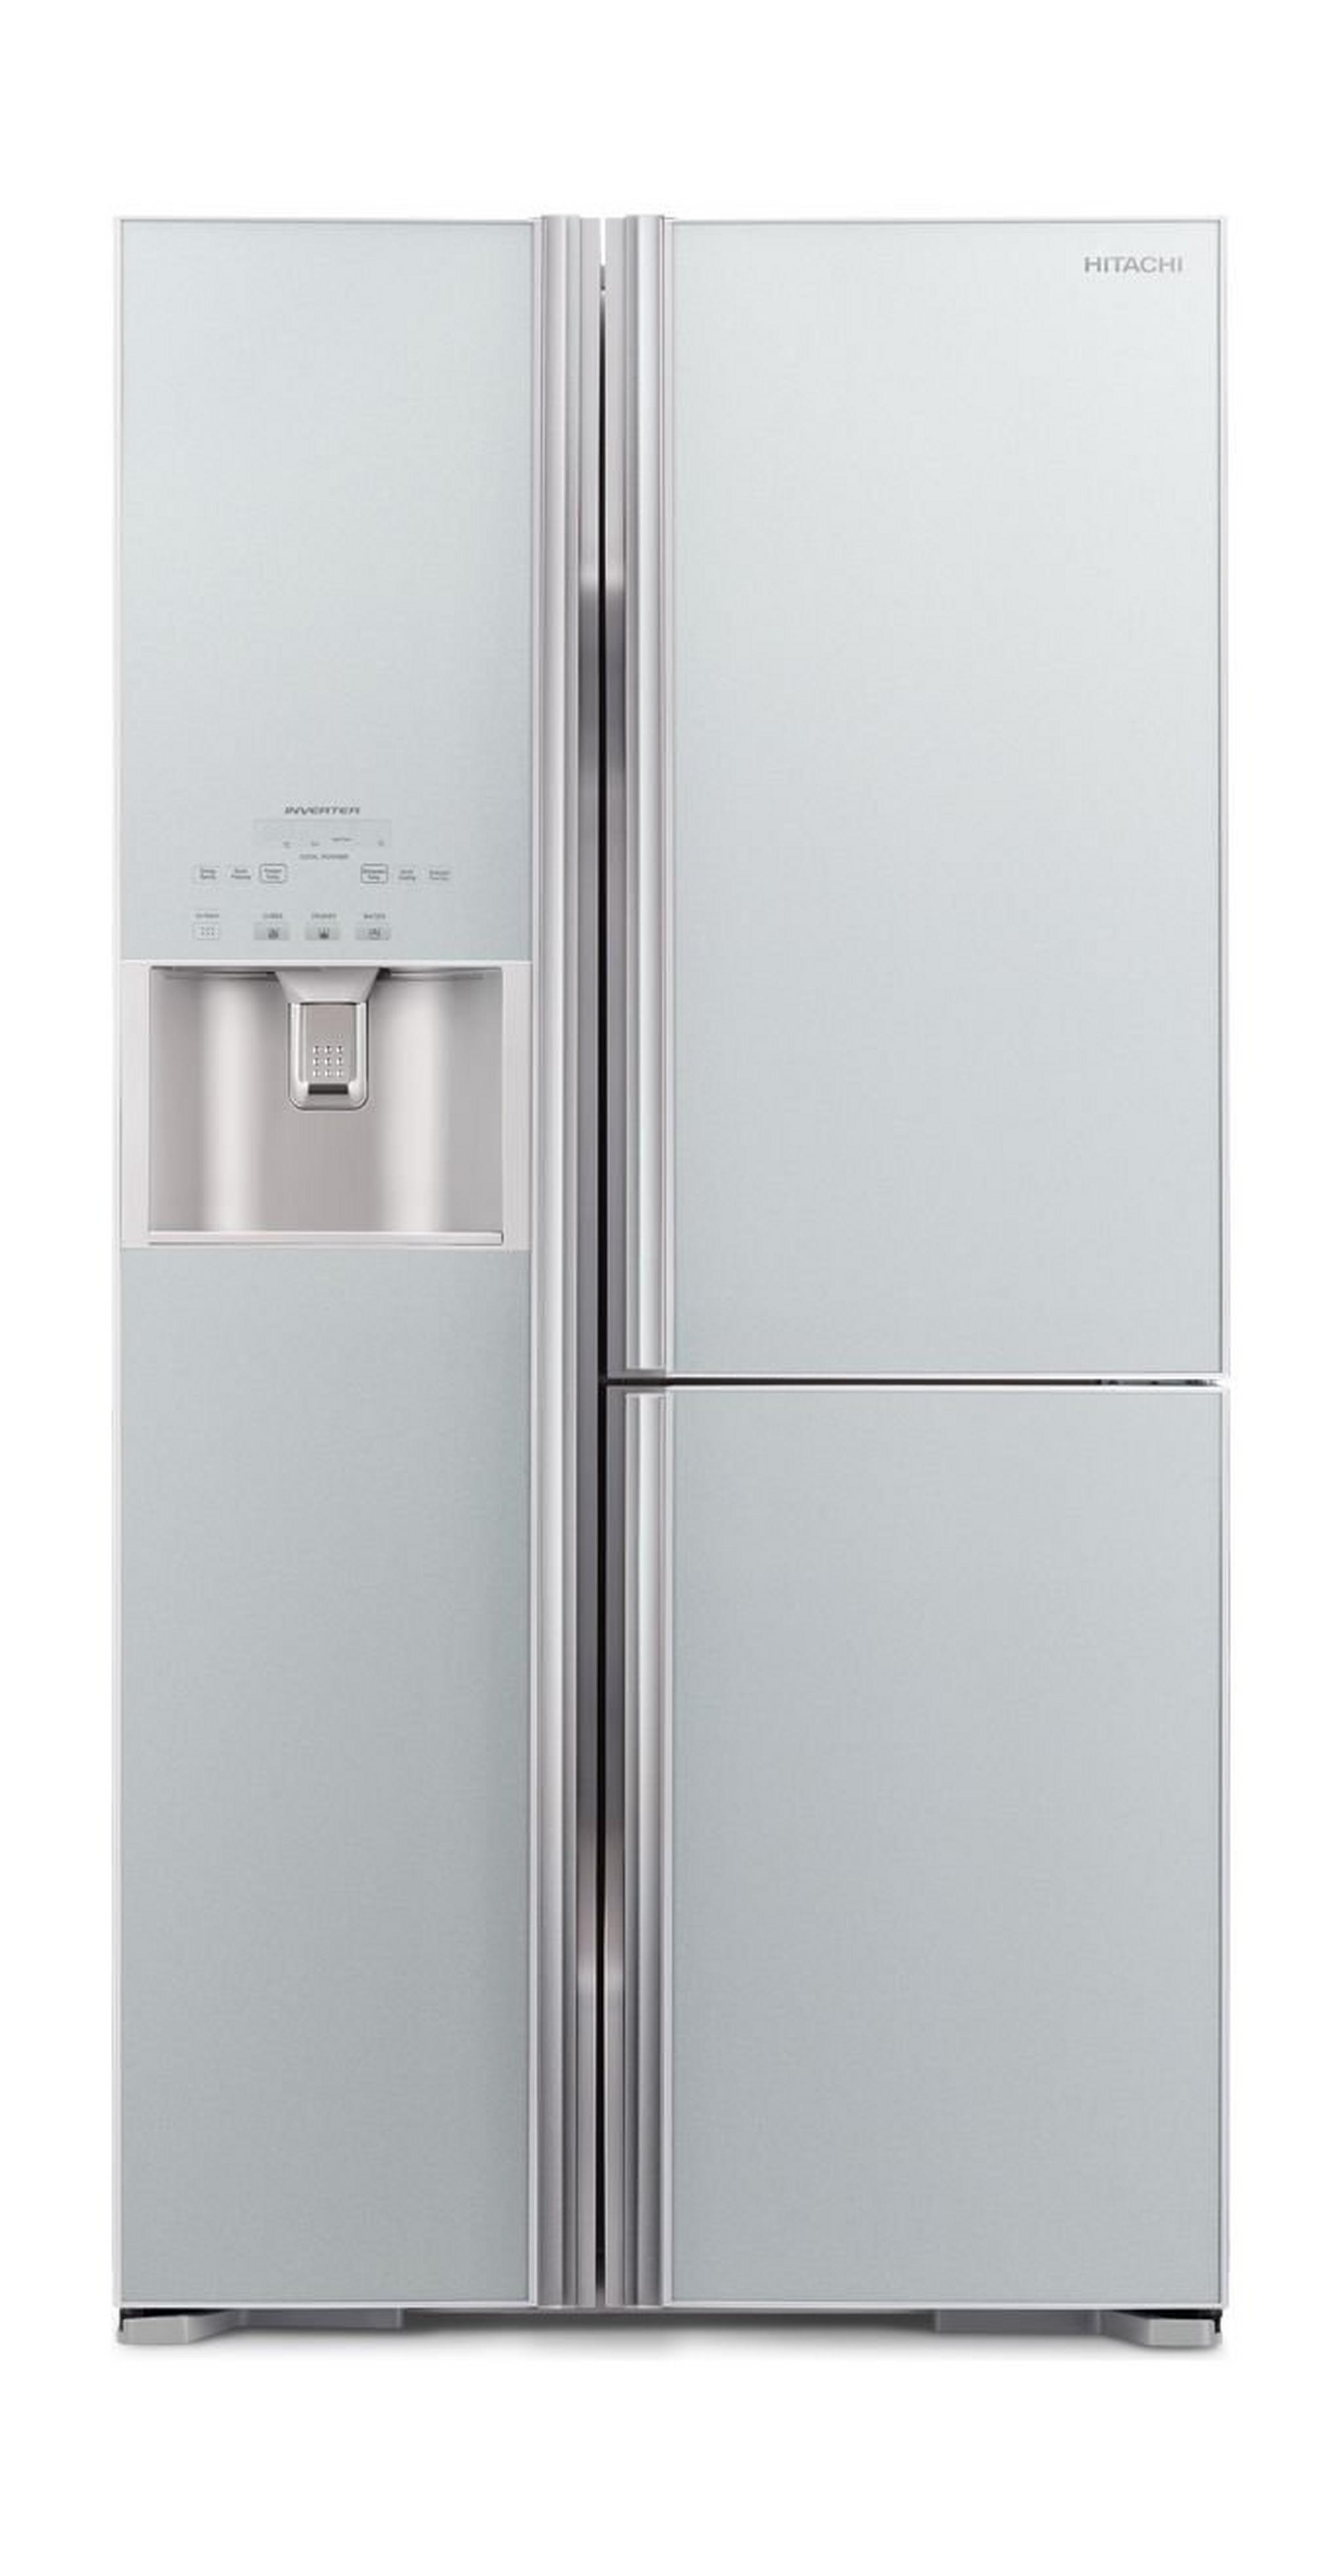 Hitachi 20 Cubic Feet Side by Side Refrigerator (R-M800GPS2-GS) - Silver